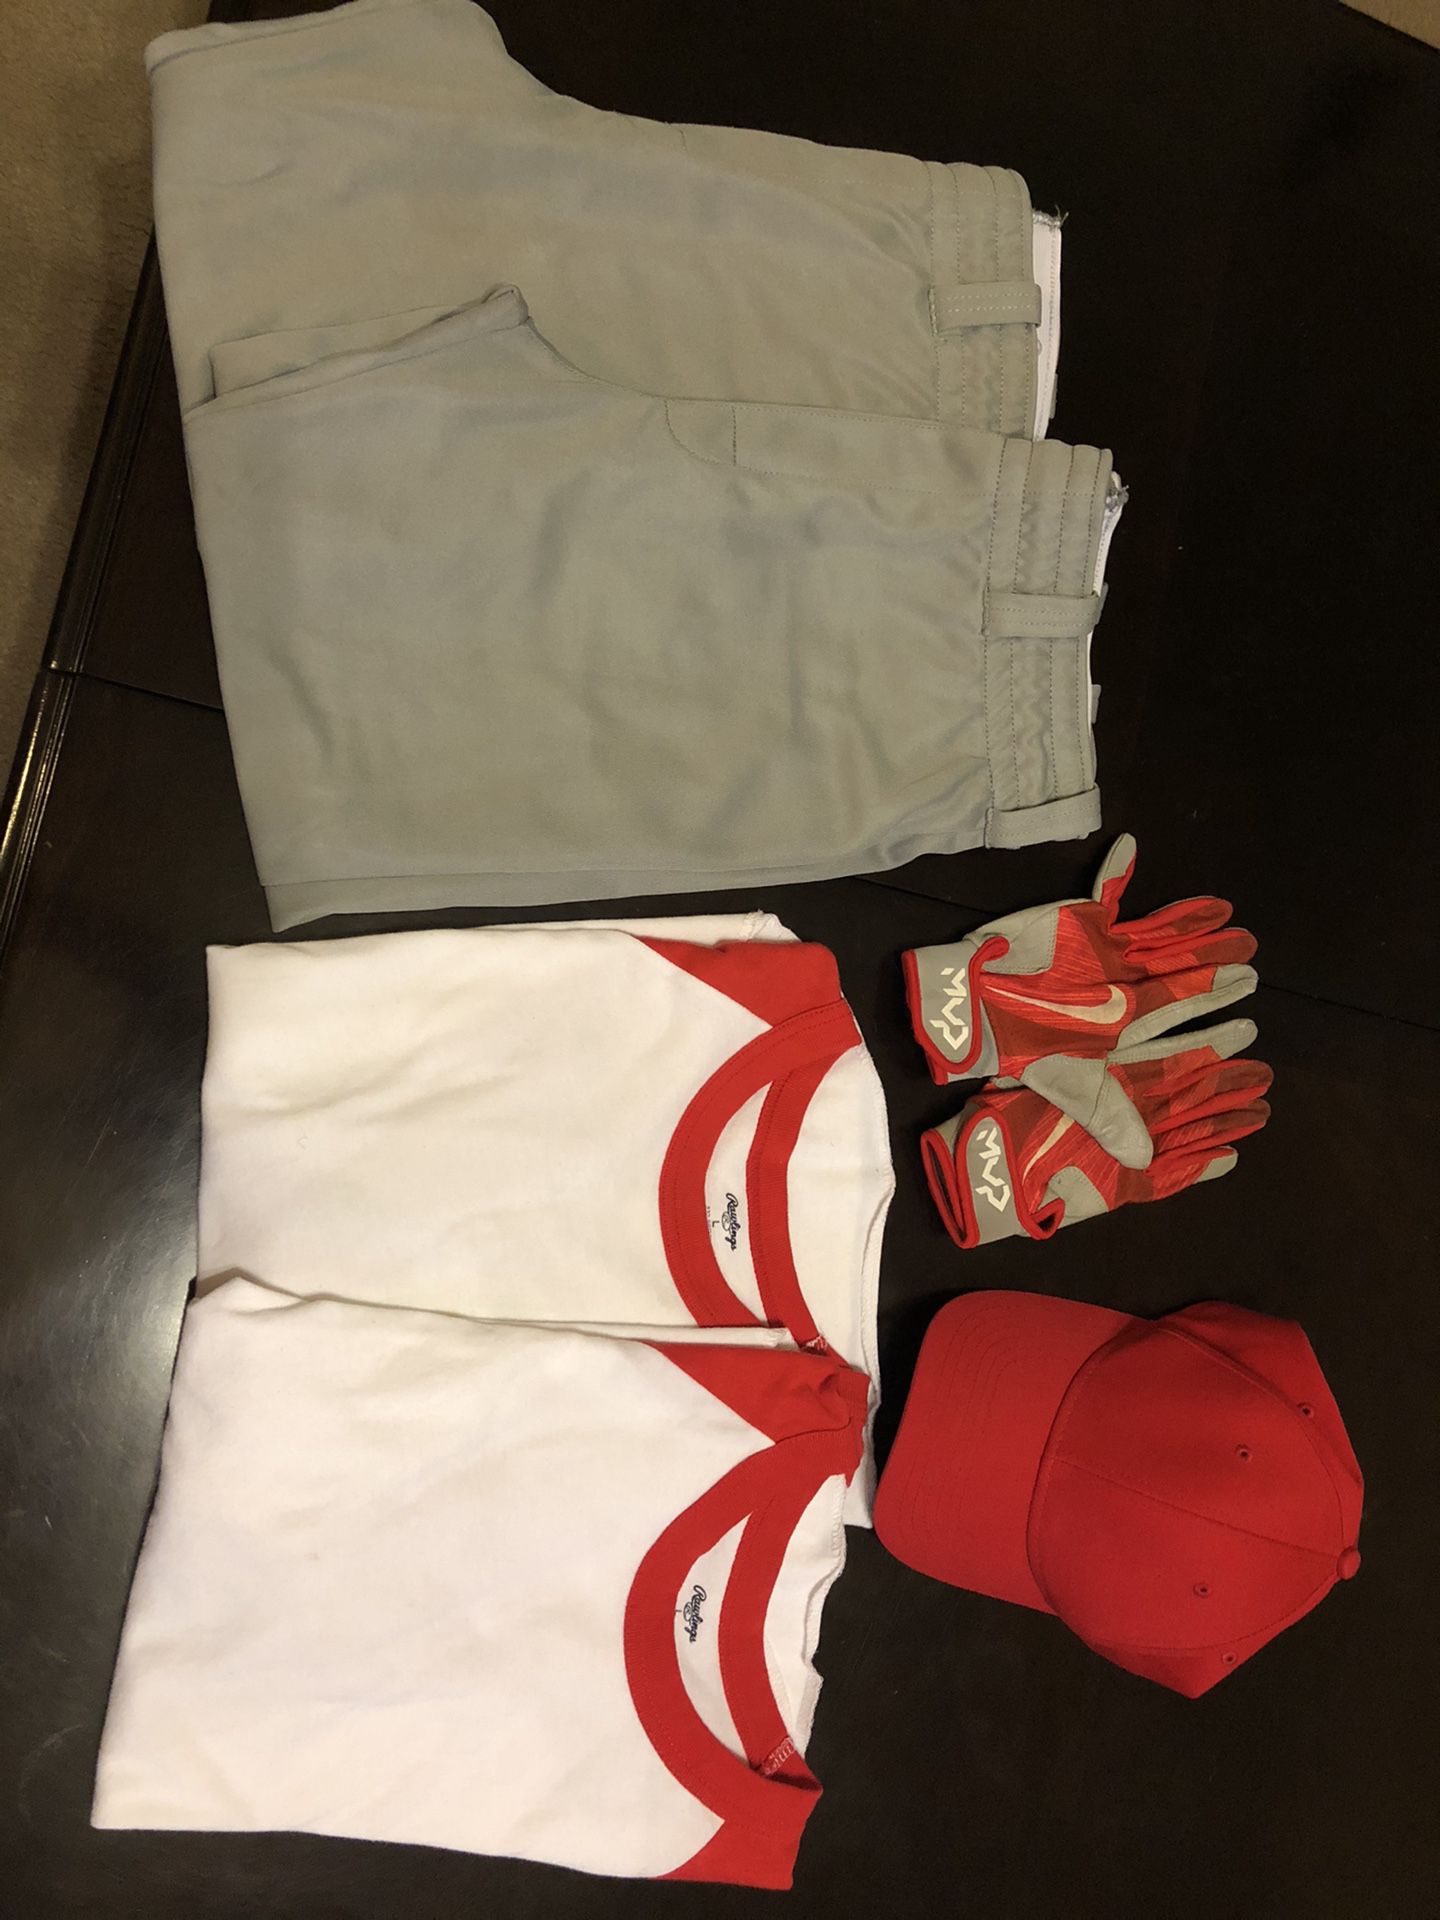 Rawlings Baseball Youth pants, shirts, gloves & hat Size Large on pants &shirts